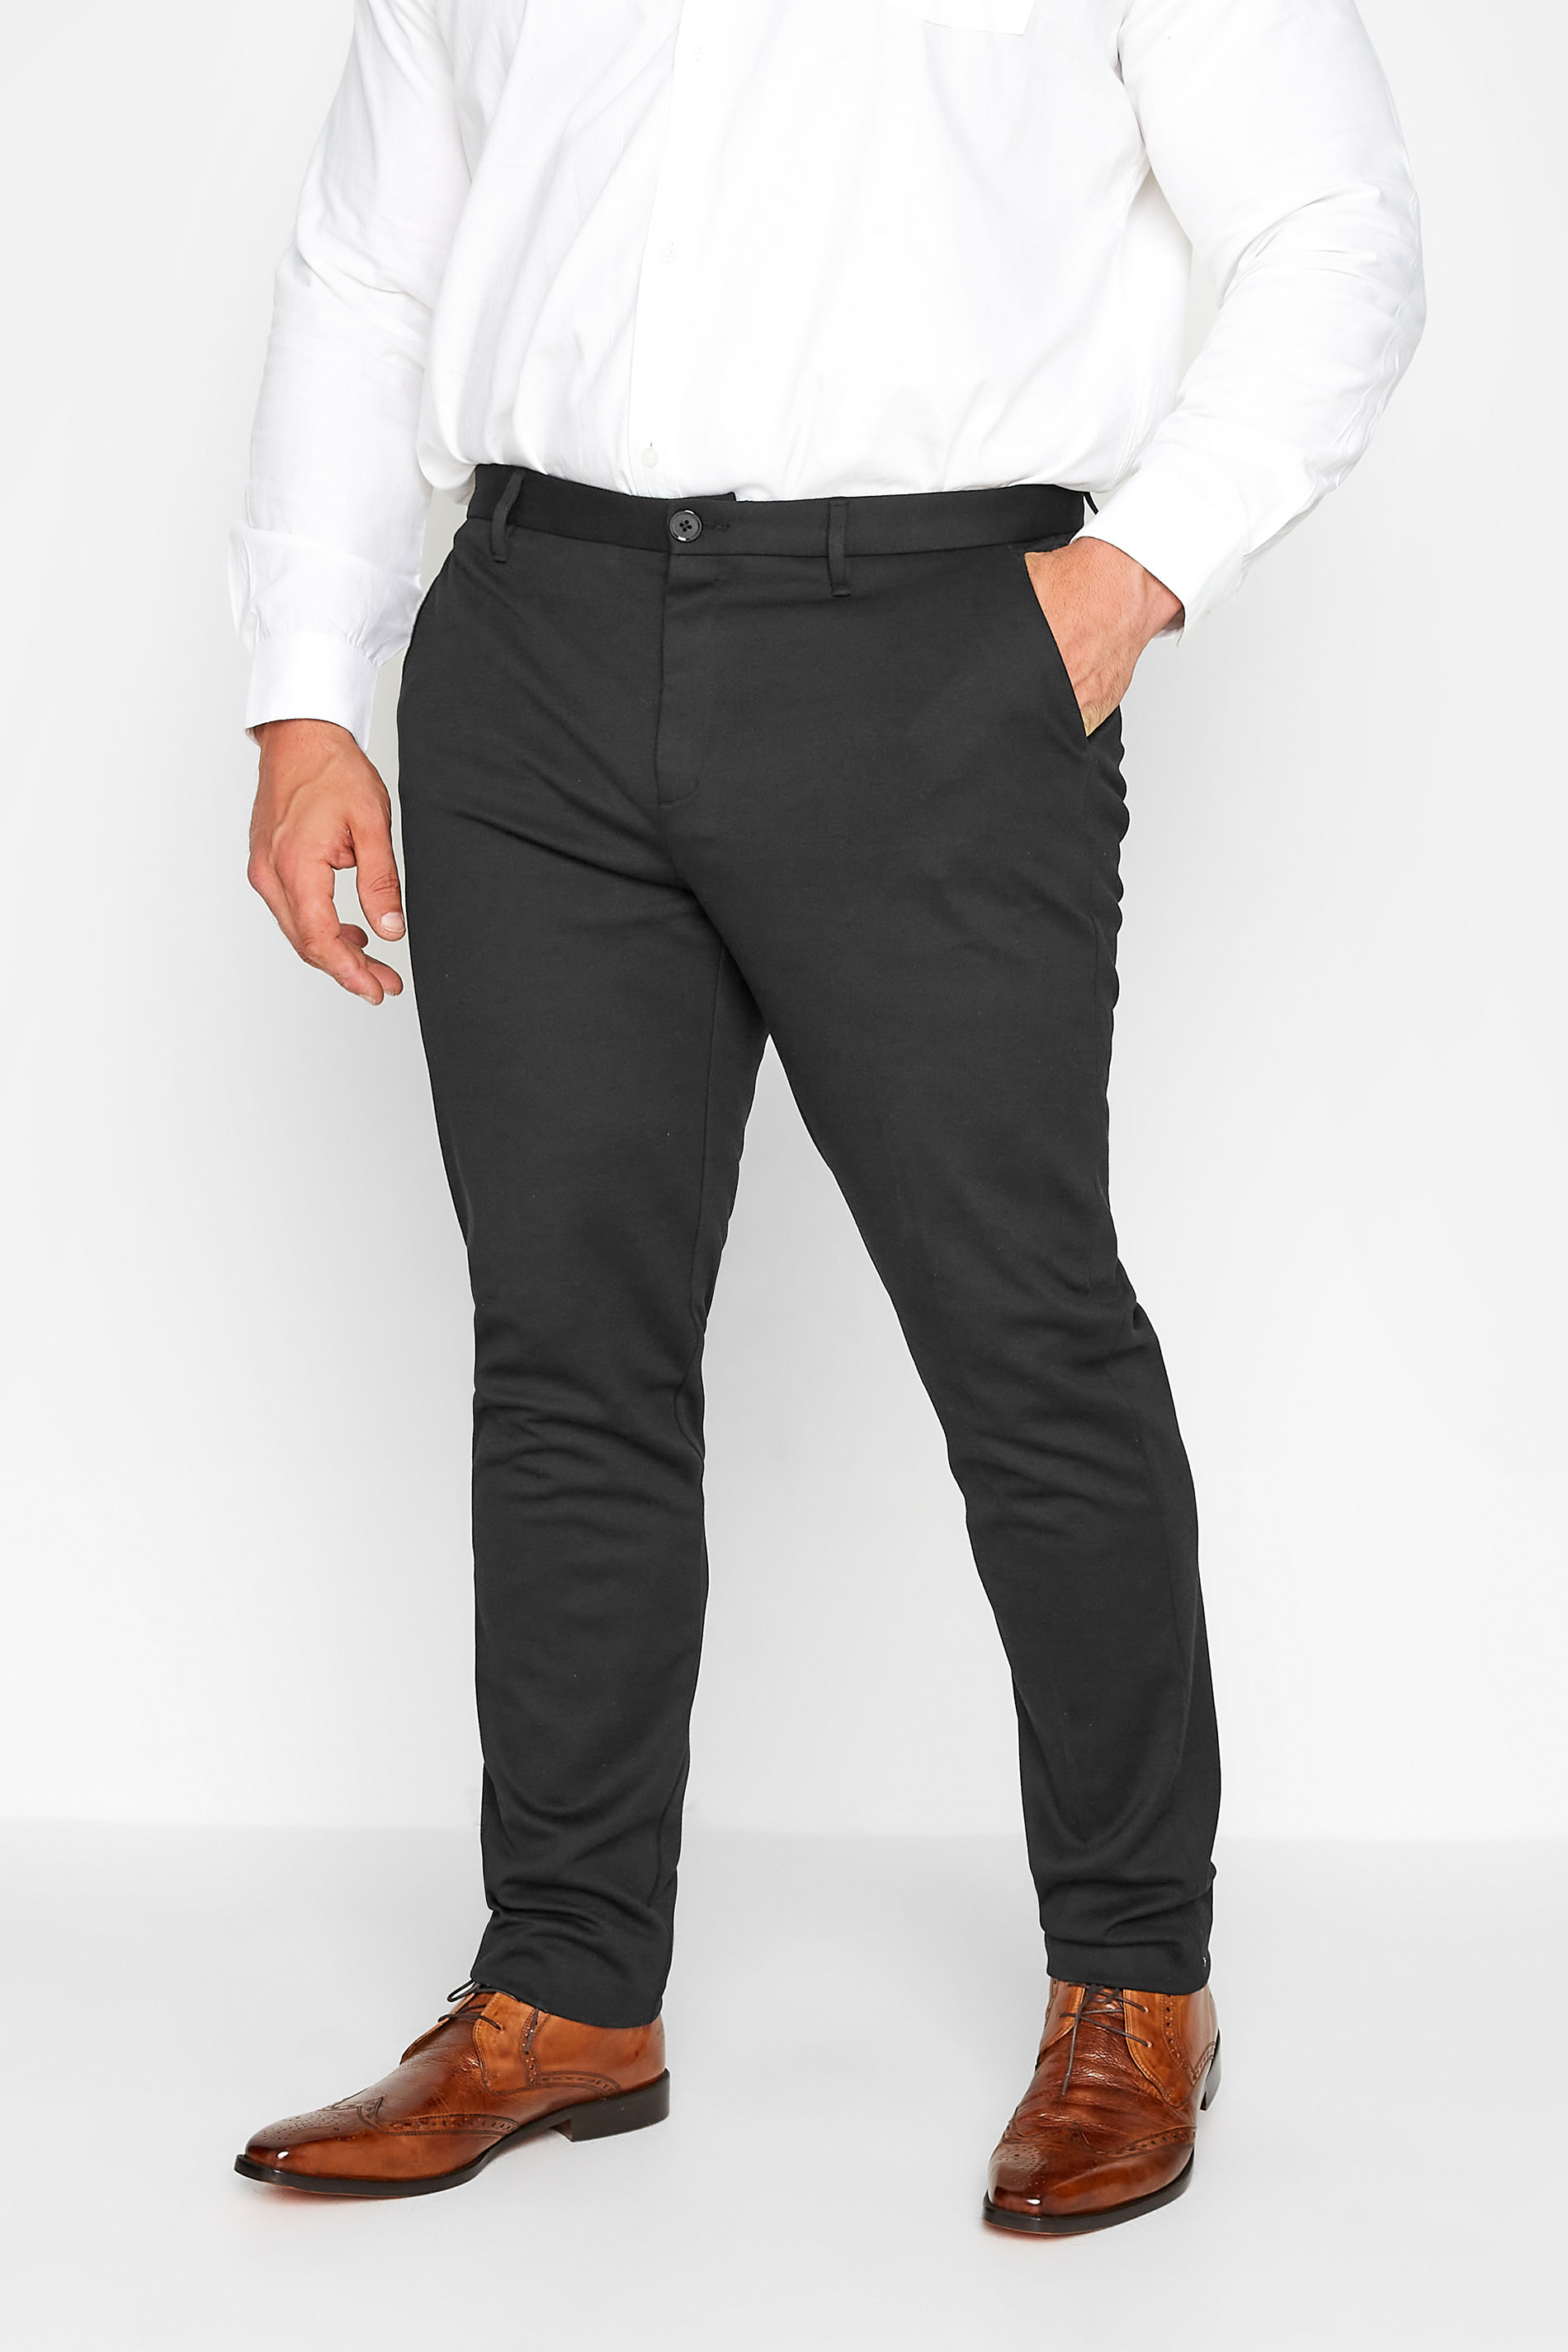 BadRhino Big & Tall Black Stretch Trousers 1